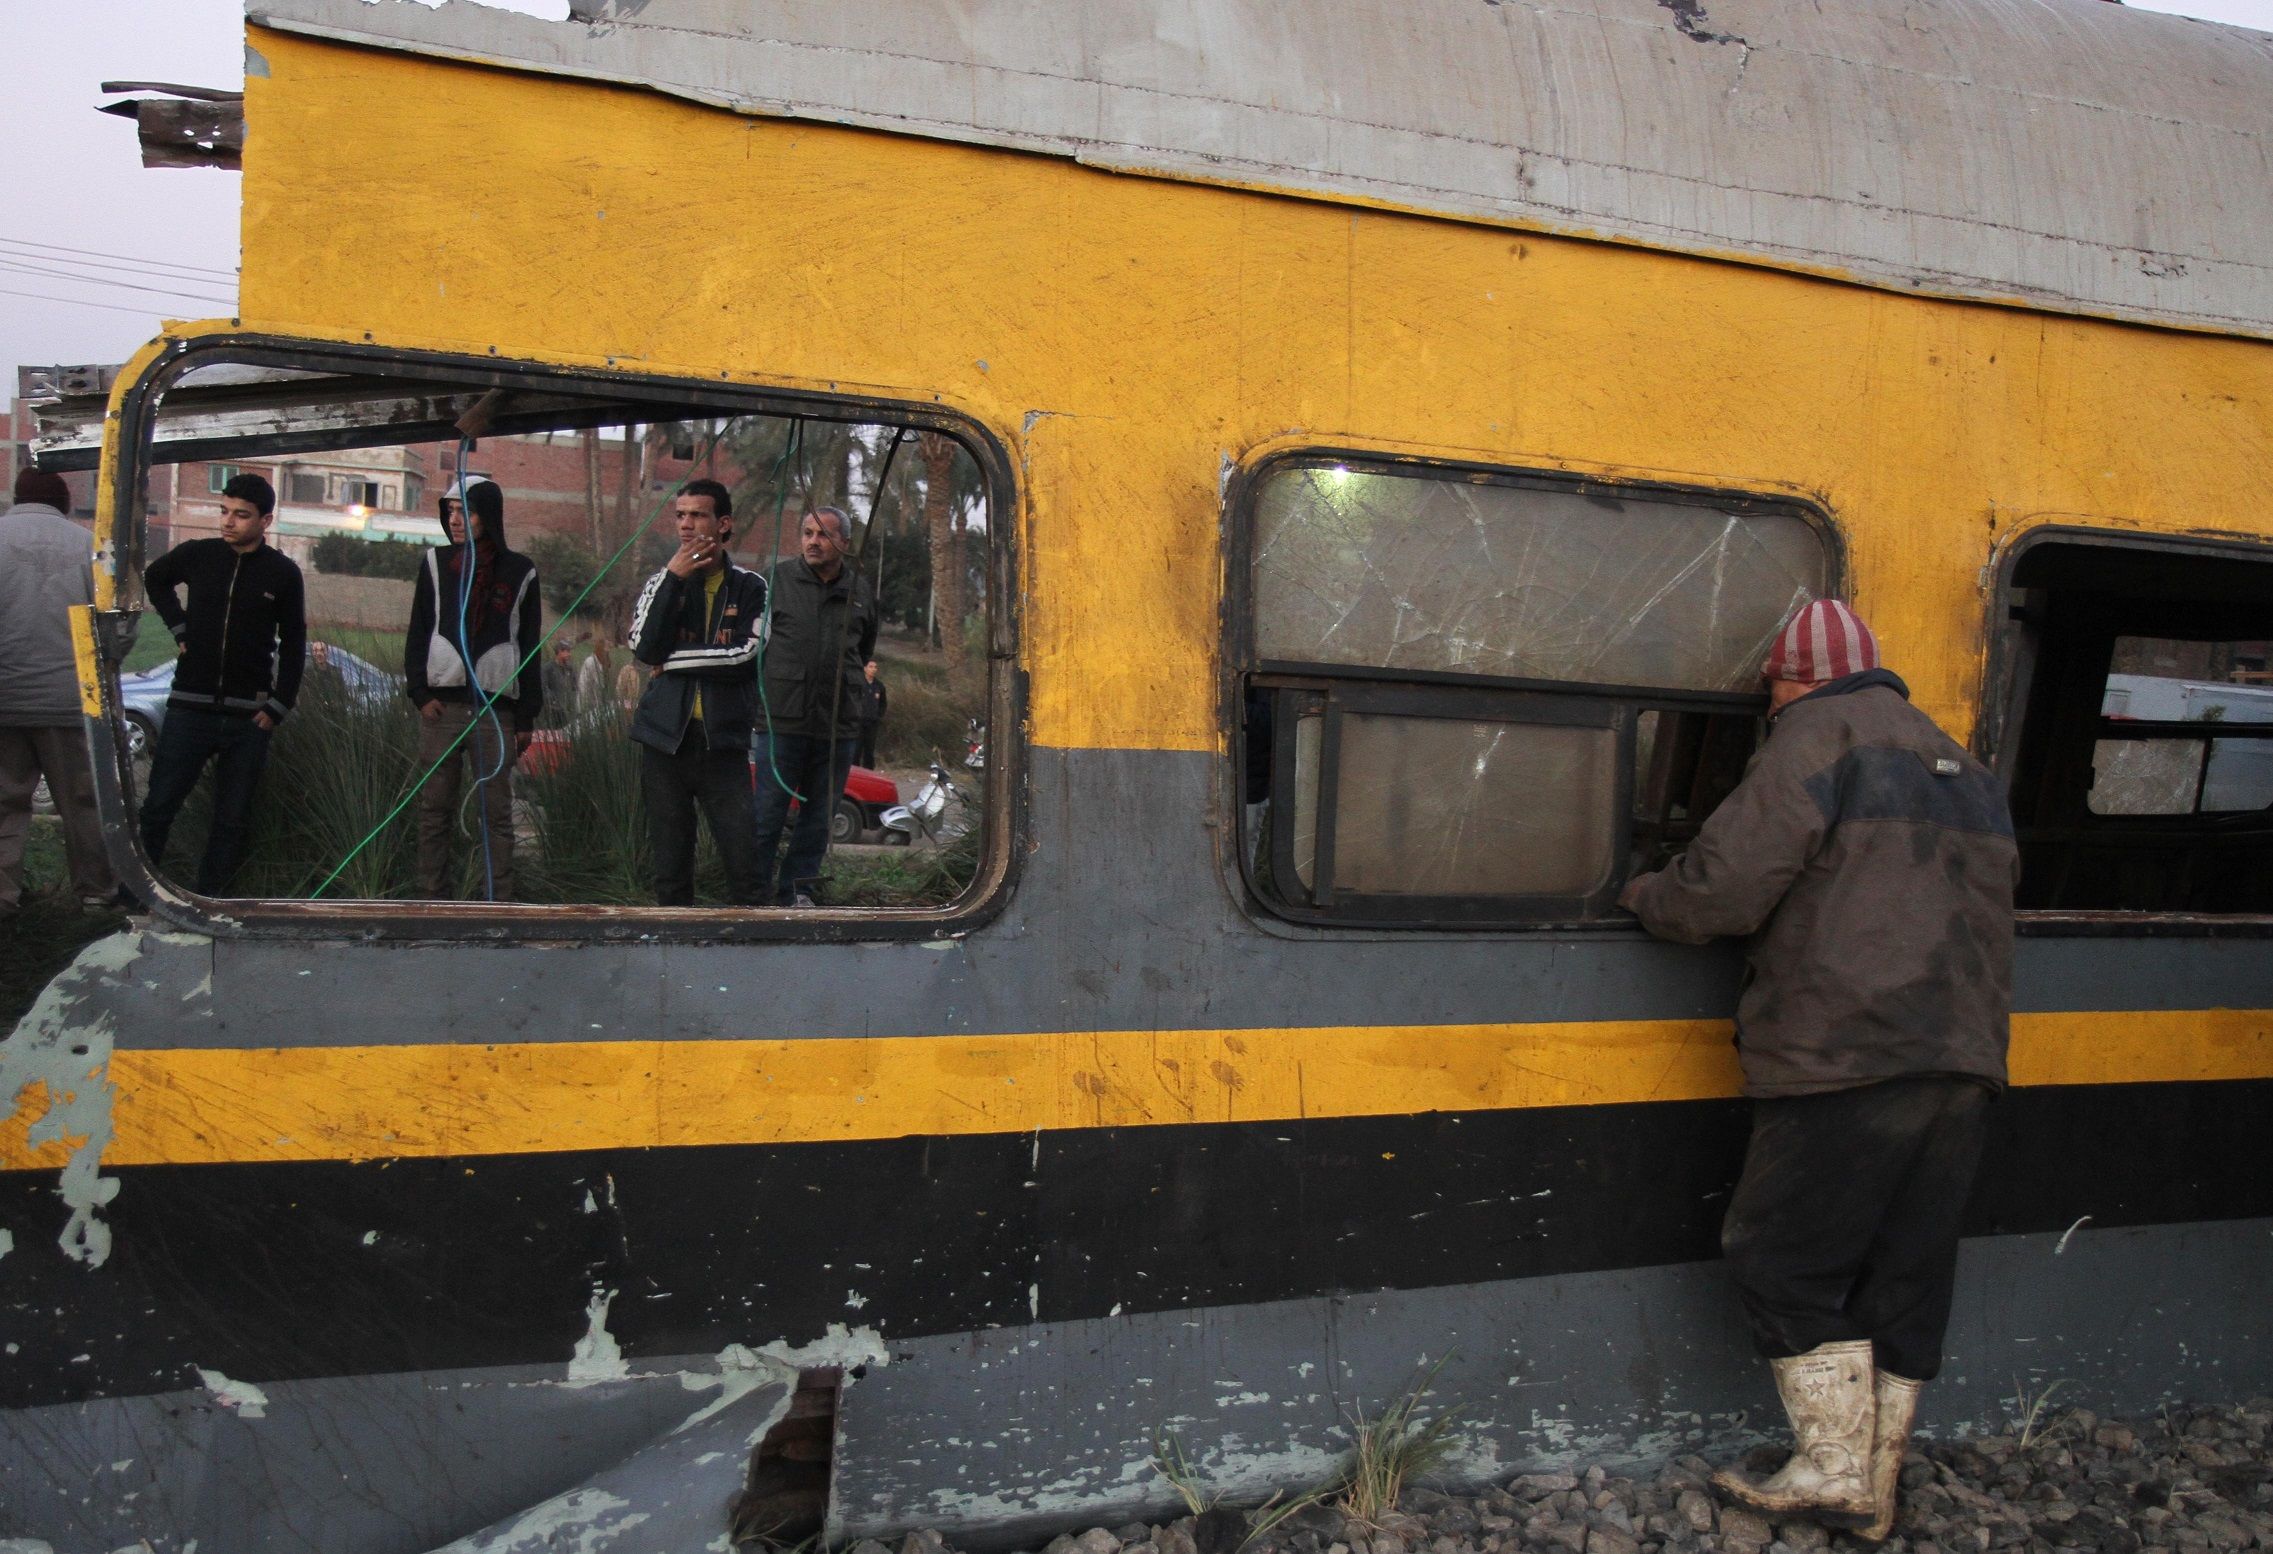 Train crash in Egypt's Alexandria kills 21, injures 55